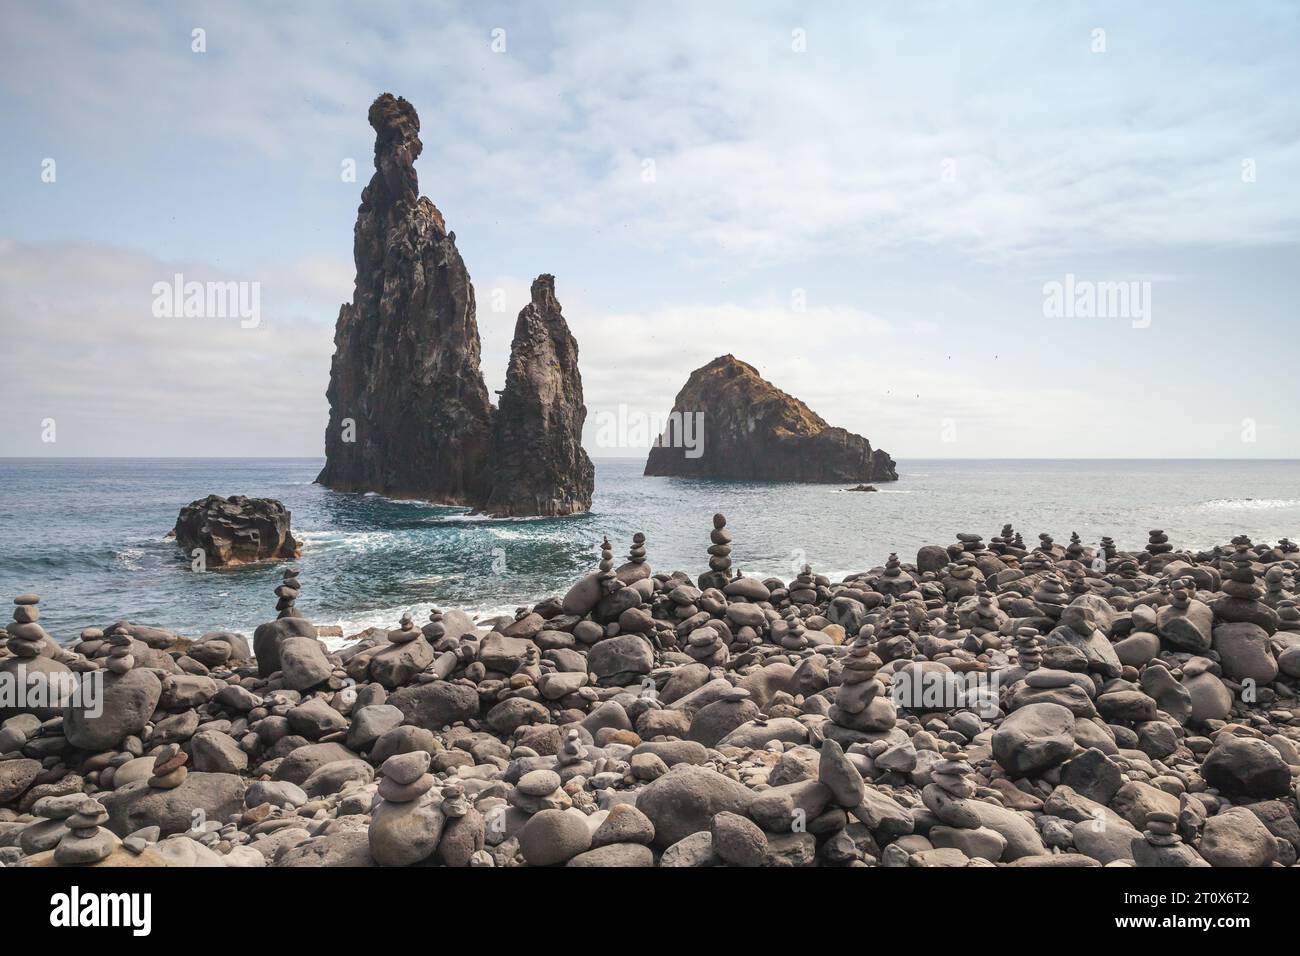 Pebble beach and dark rocky Islets of the Ribeira da Janela, Madeira island, Portugal Stock Photo